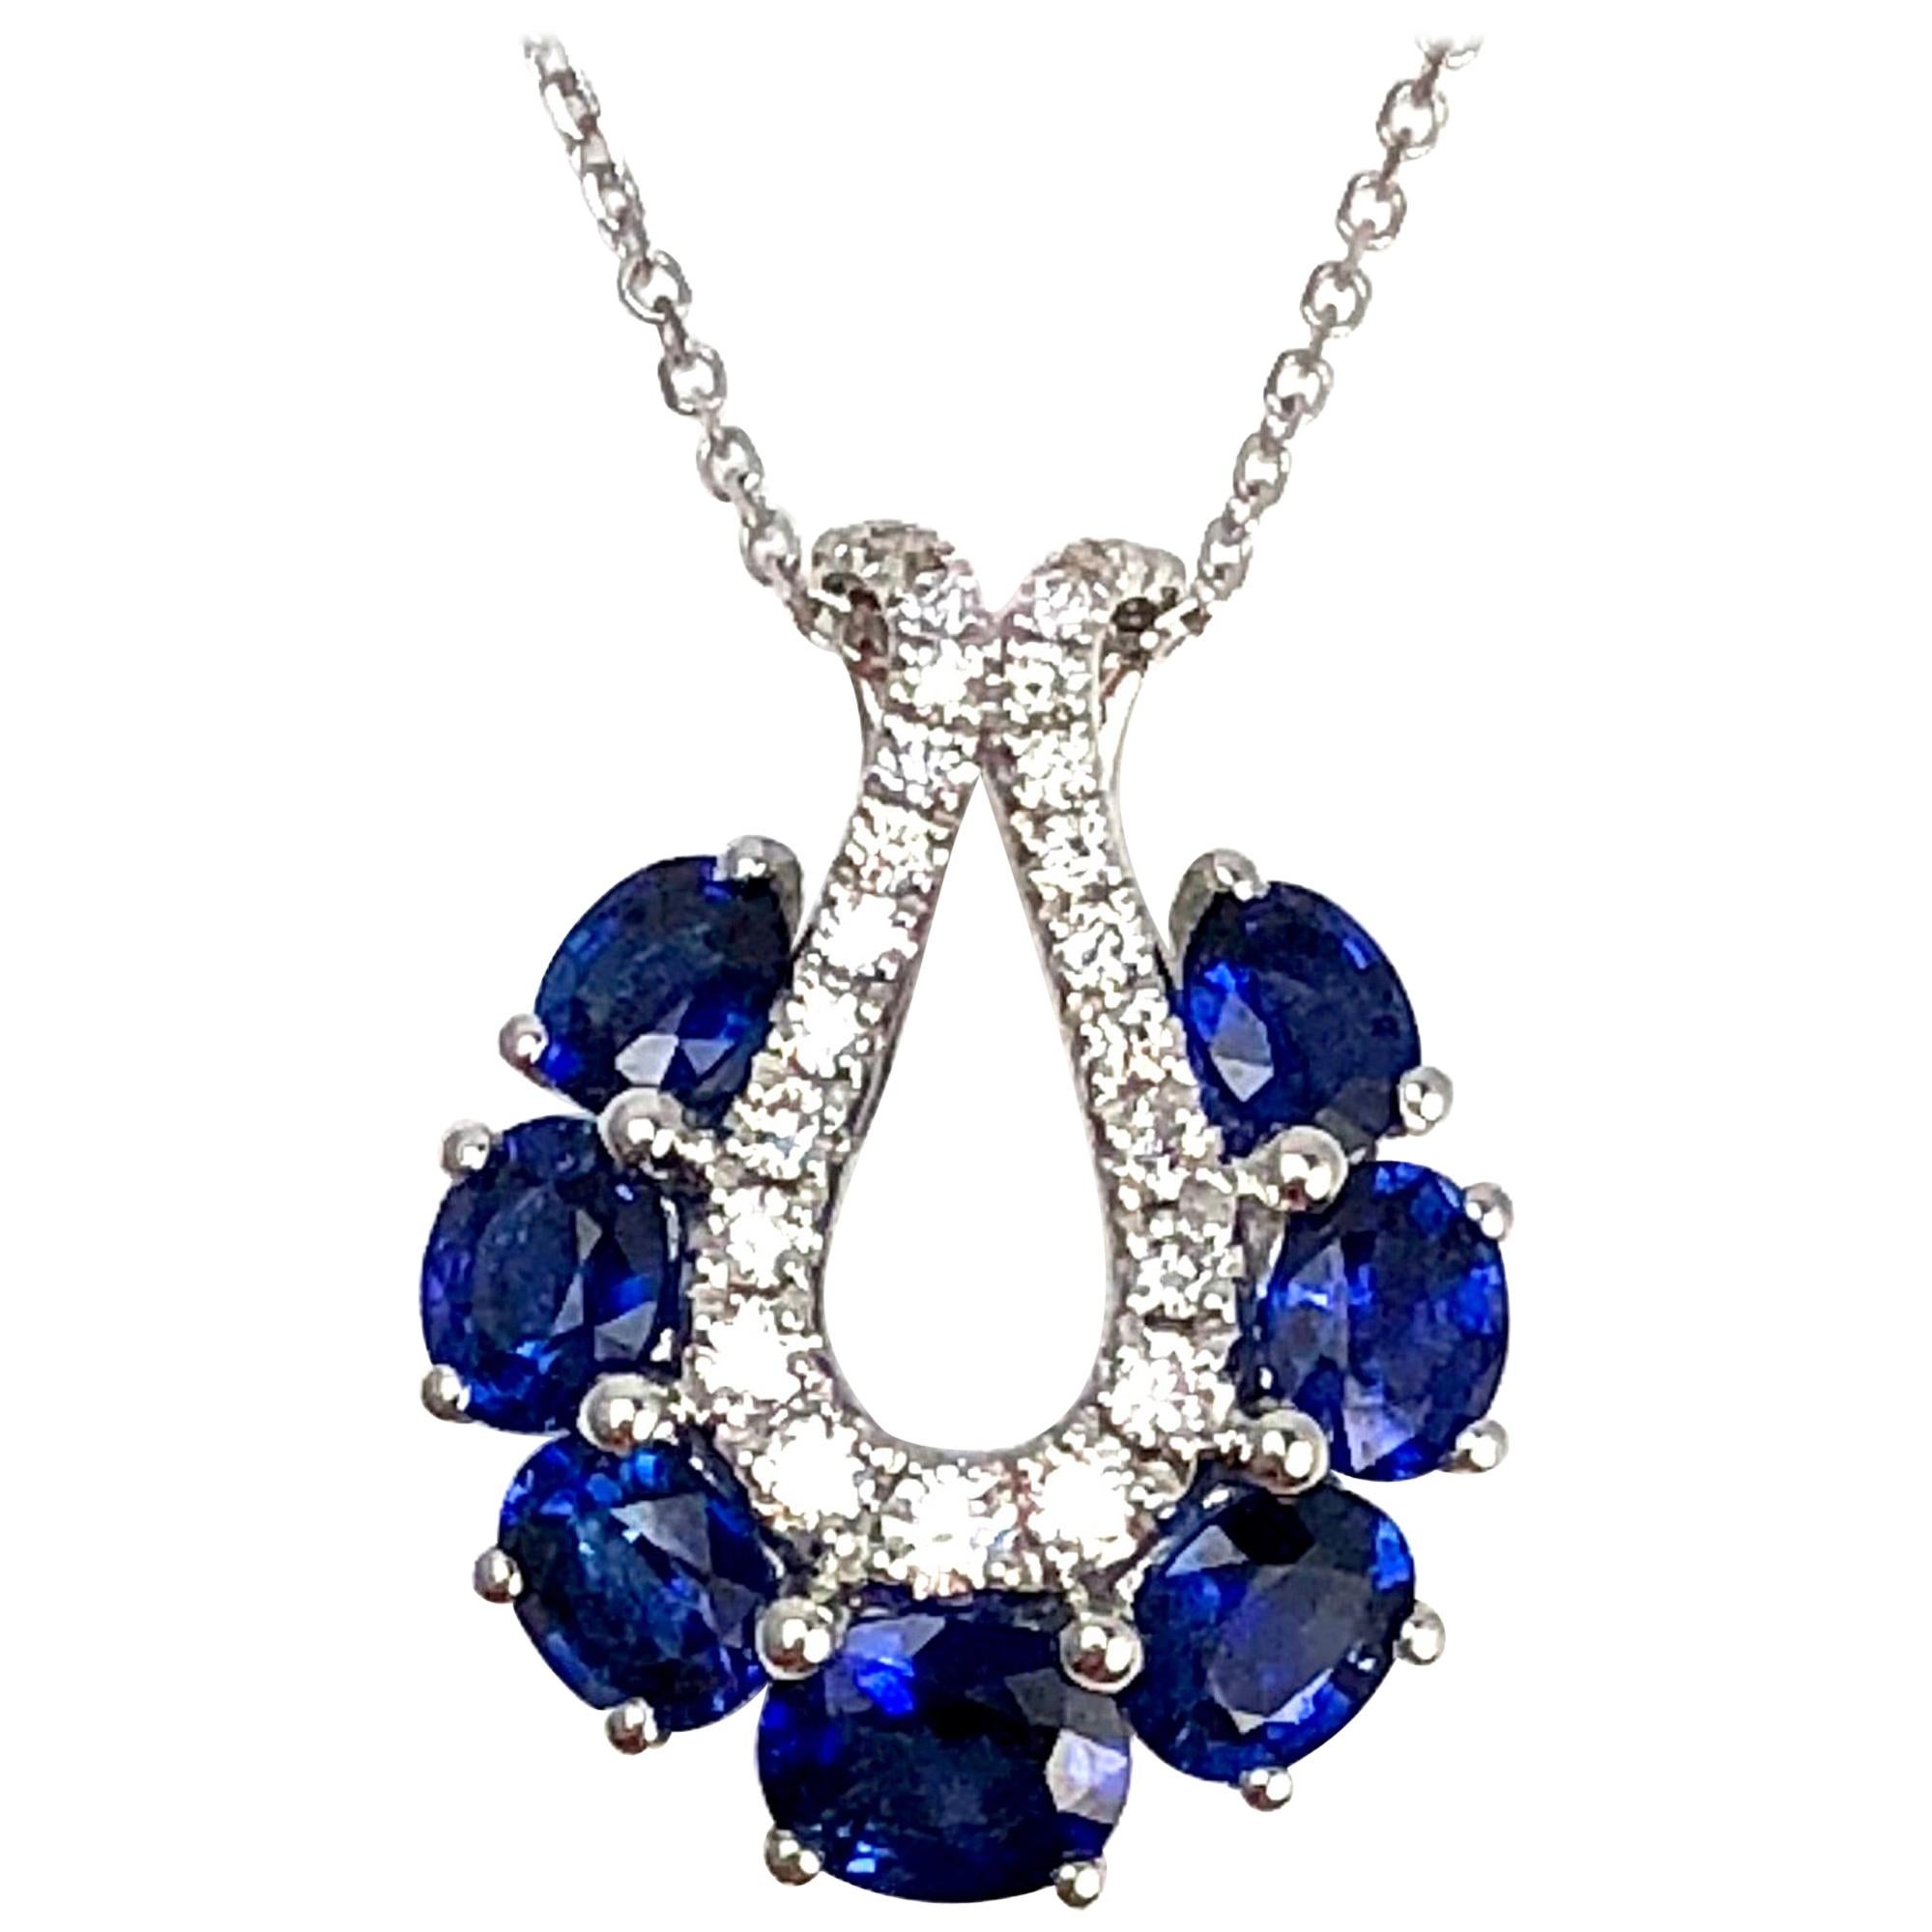 2.01 Carat Oval Cut Blue Sapphire and Diamond Pendant in 18 Karat White Gold